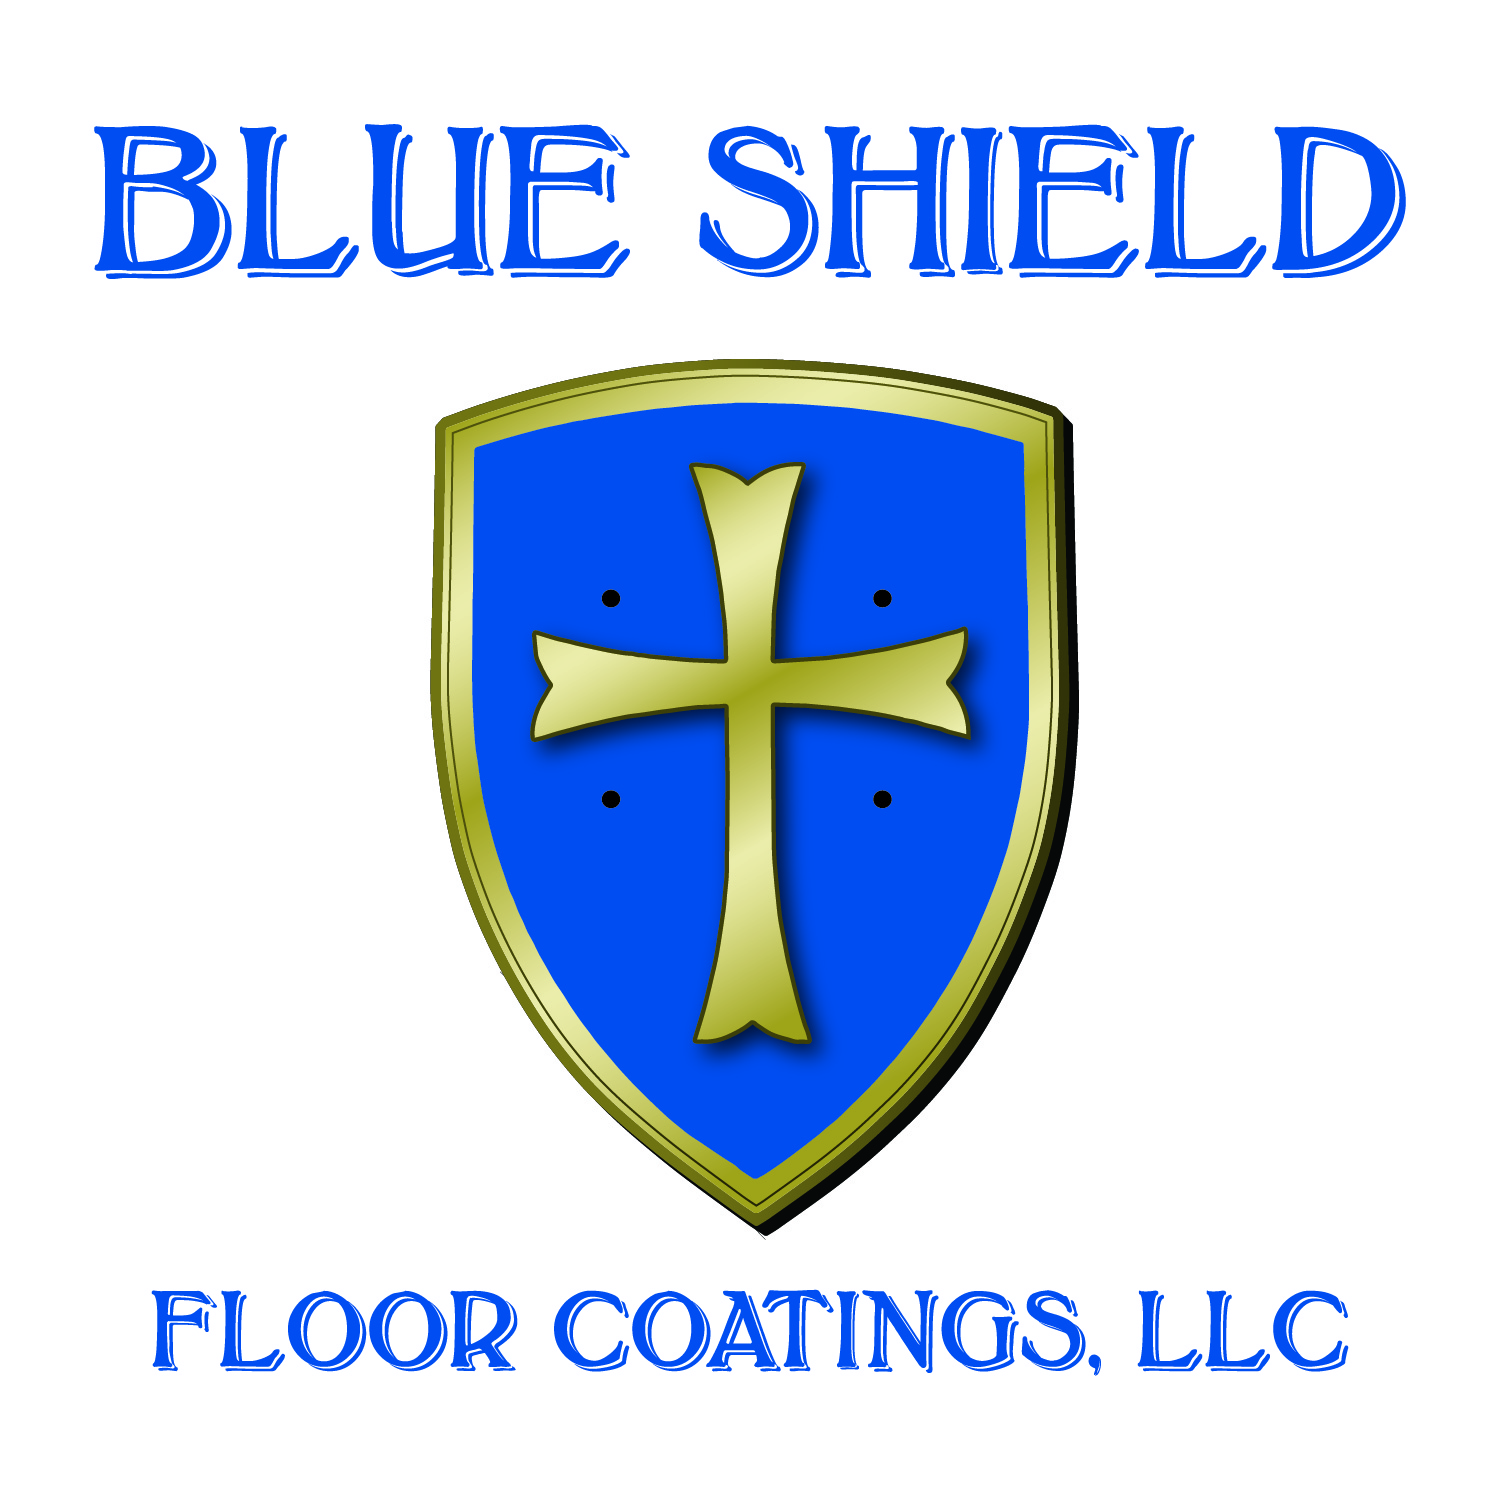 Blue Shield Floor Coatings, LLC Logo